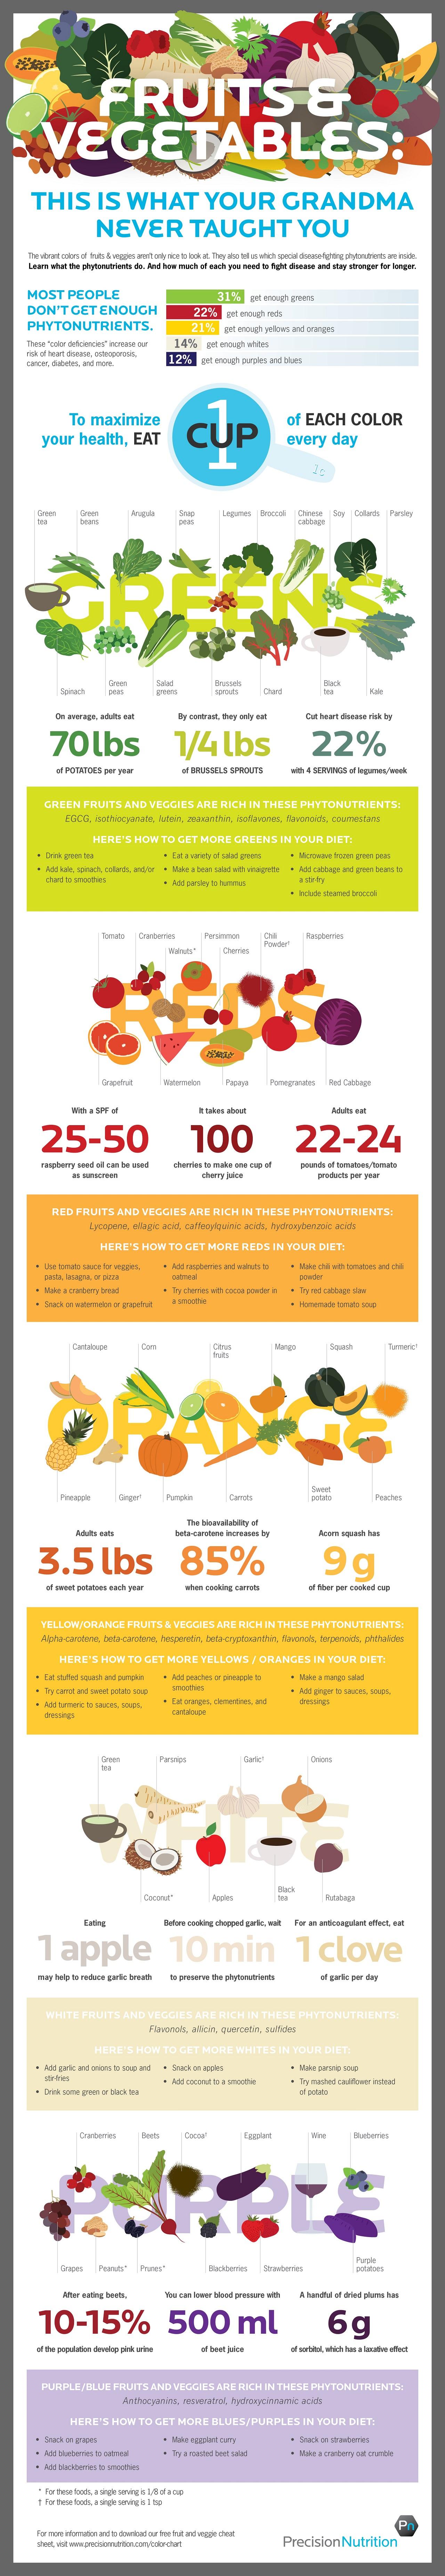 Fruits & Veggies 101